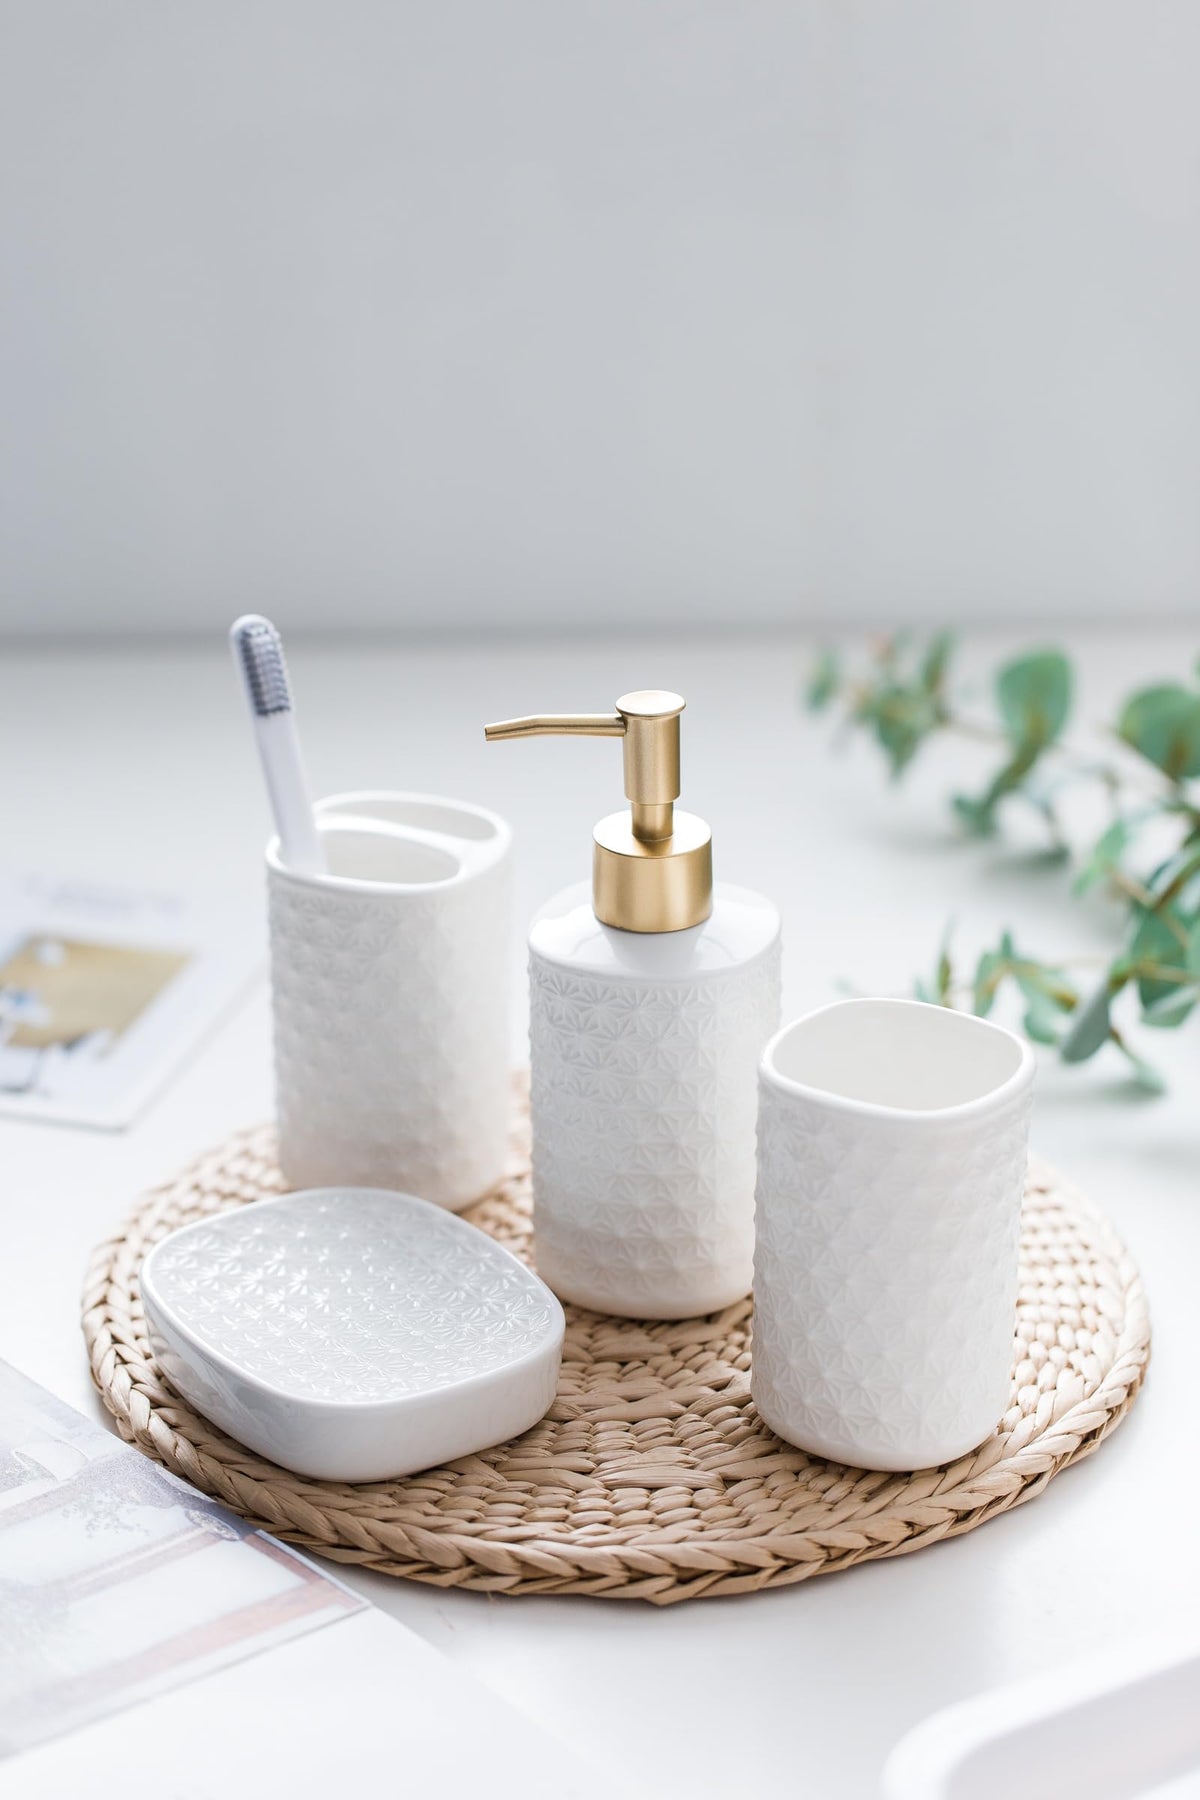 UMAI 4 Pcs Ceramic Bathroom Accessories Set - Tooth Brush Holder, Water Cup (300ml), Soap Dispenser (330ml), Soap Holder Dish for Bathroom (White)